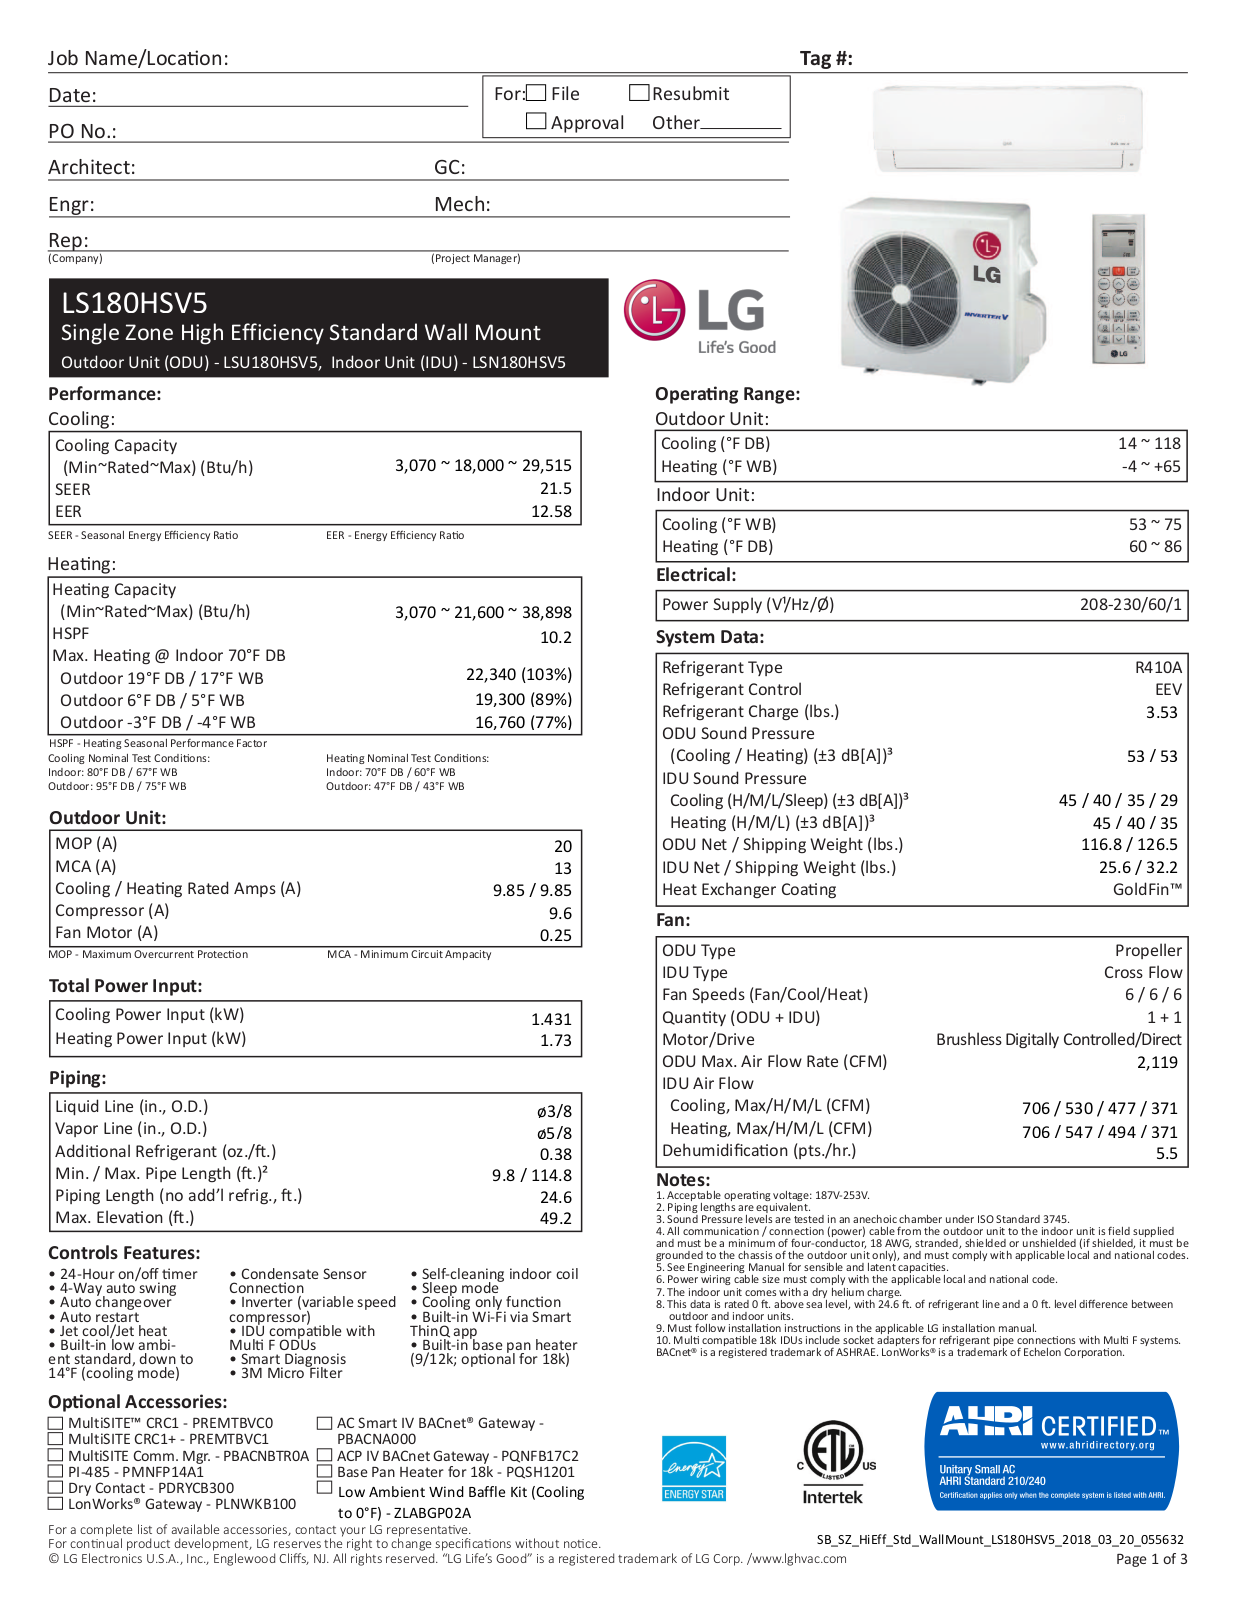 LG LS180HSV5 User Manual